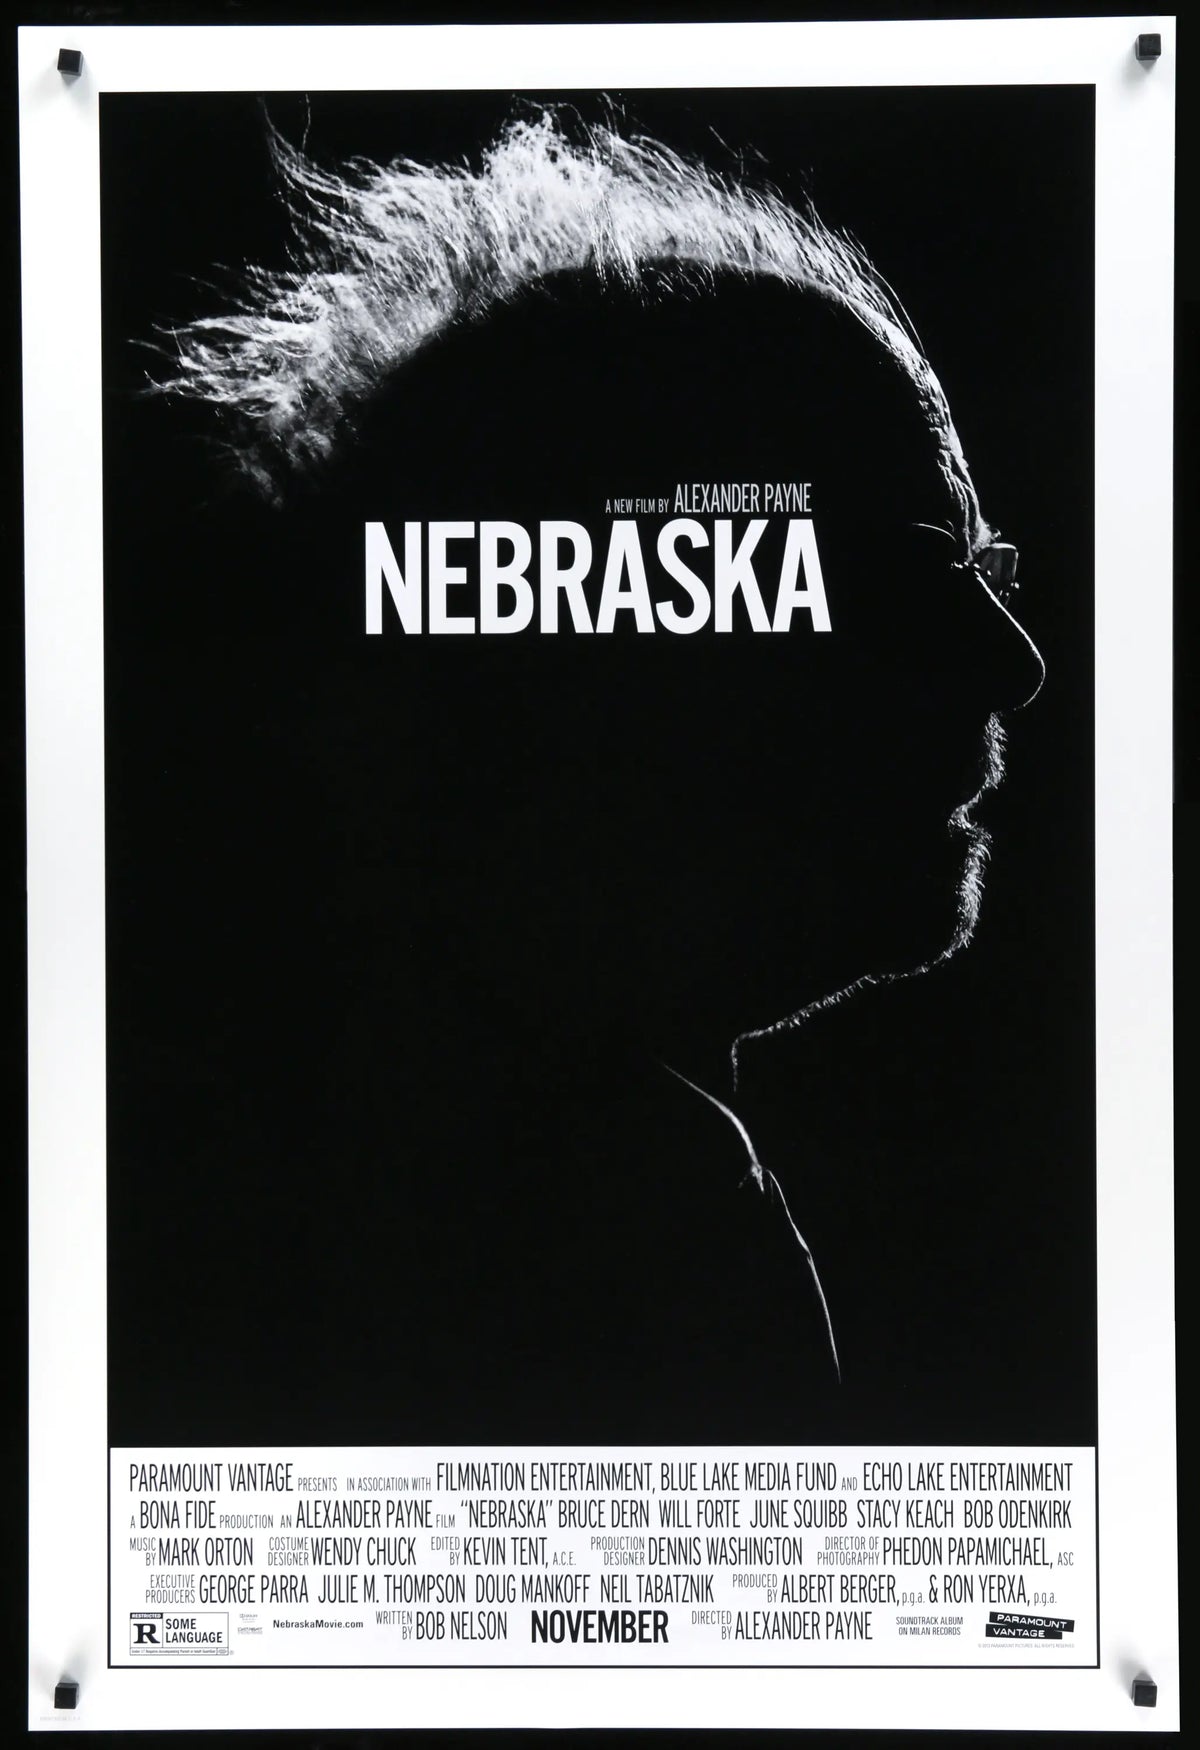 Nebraska (2013) original movie poster for sale at Original Film Art